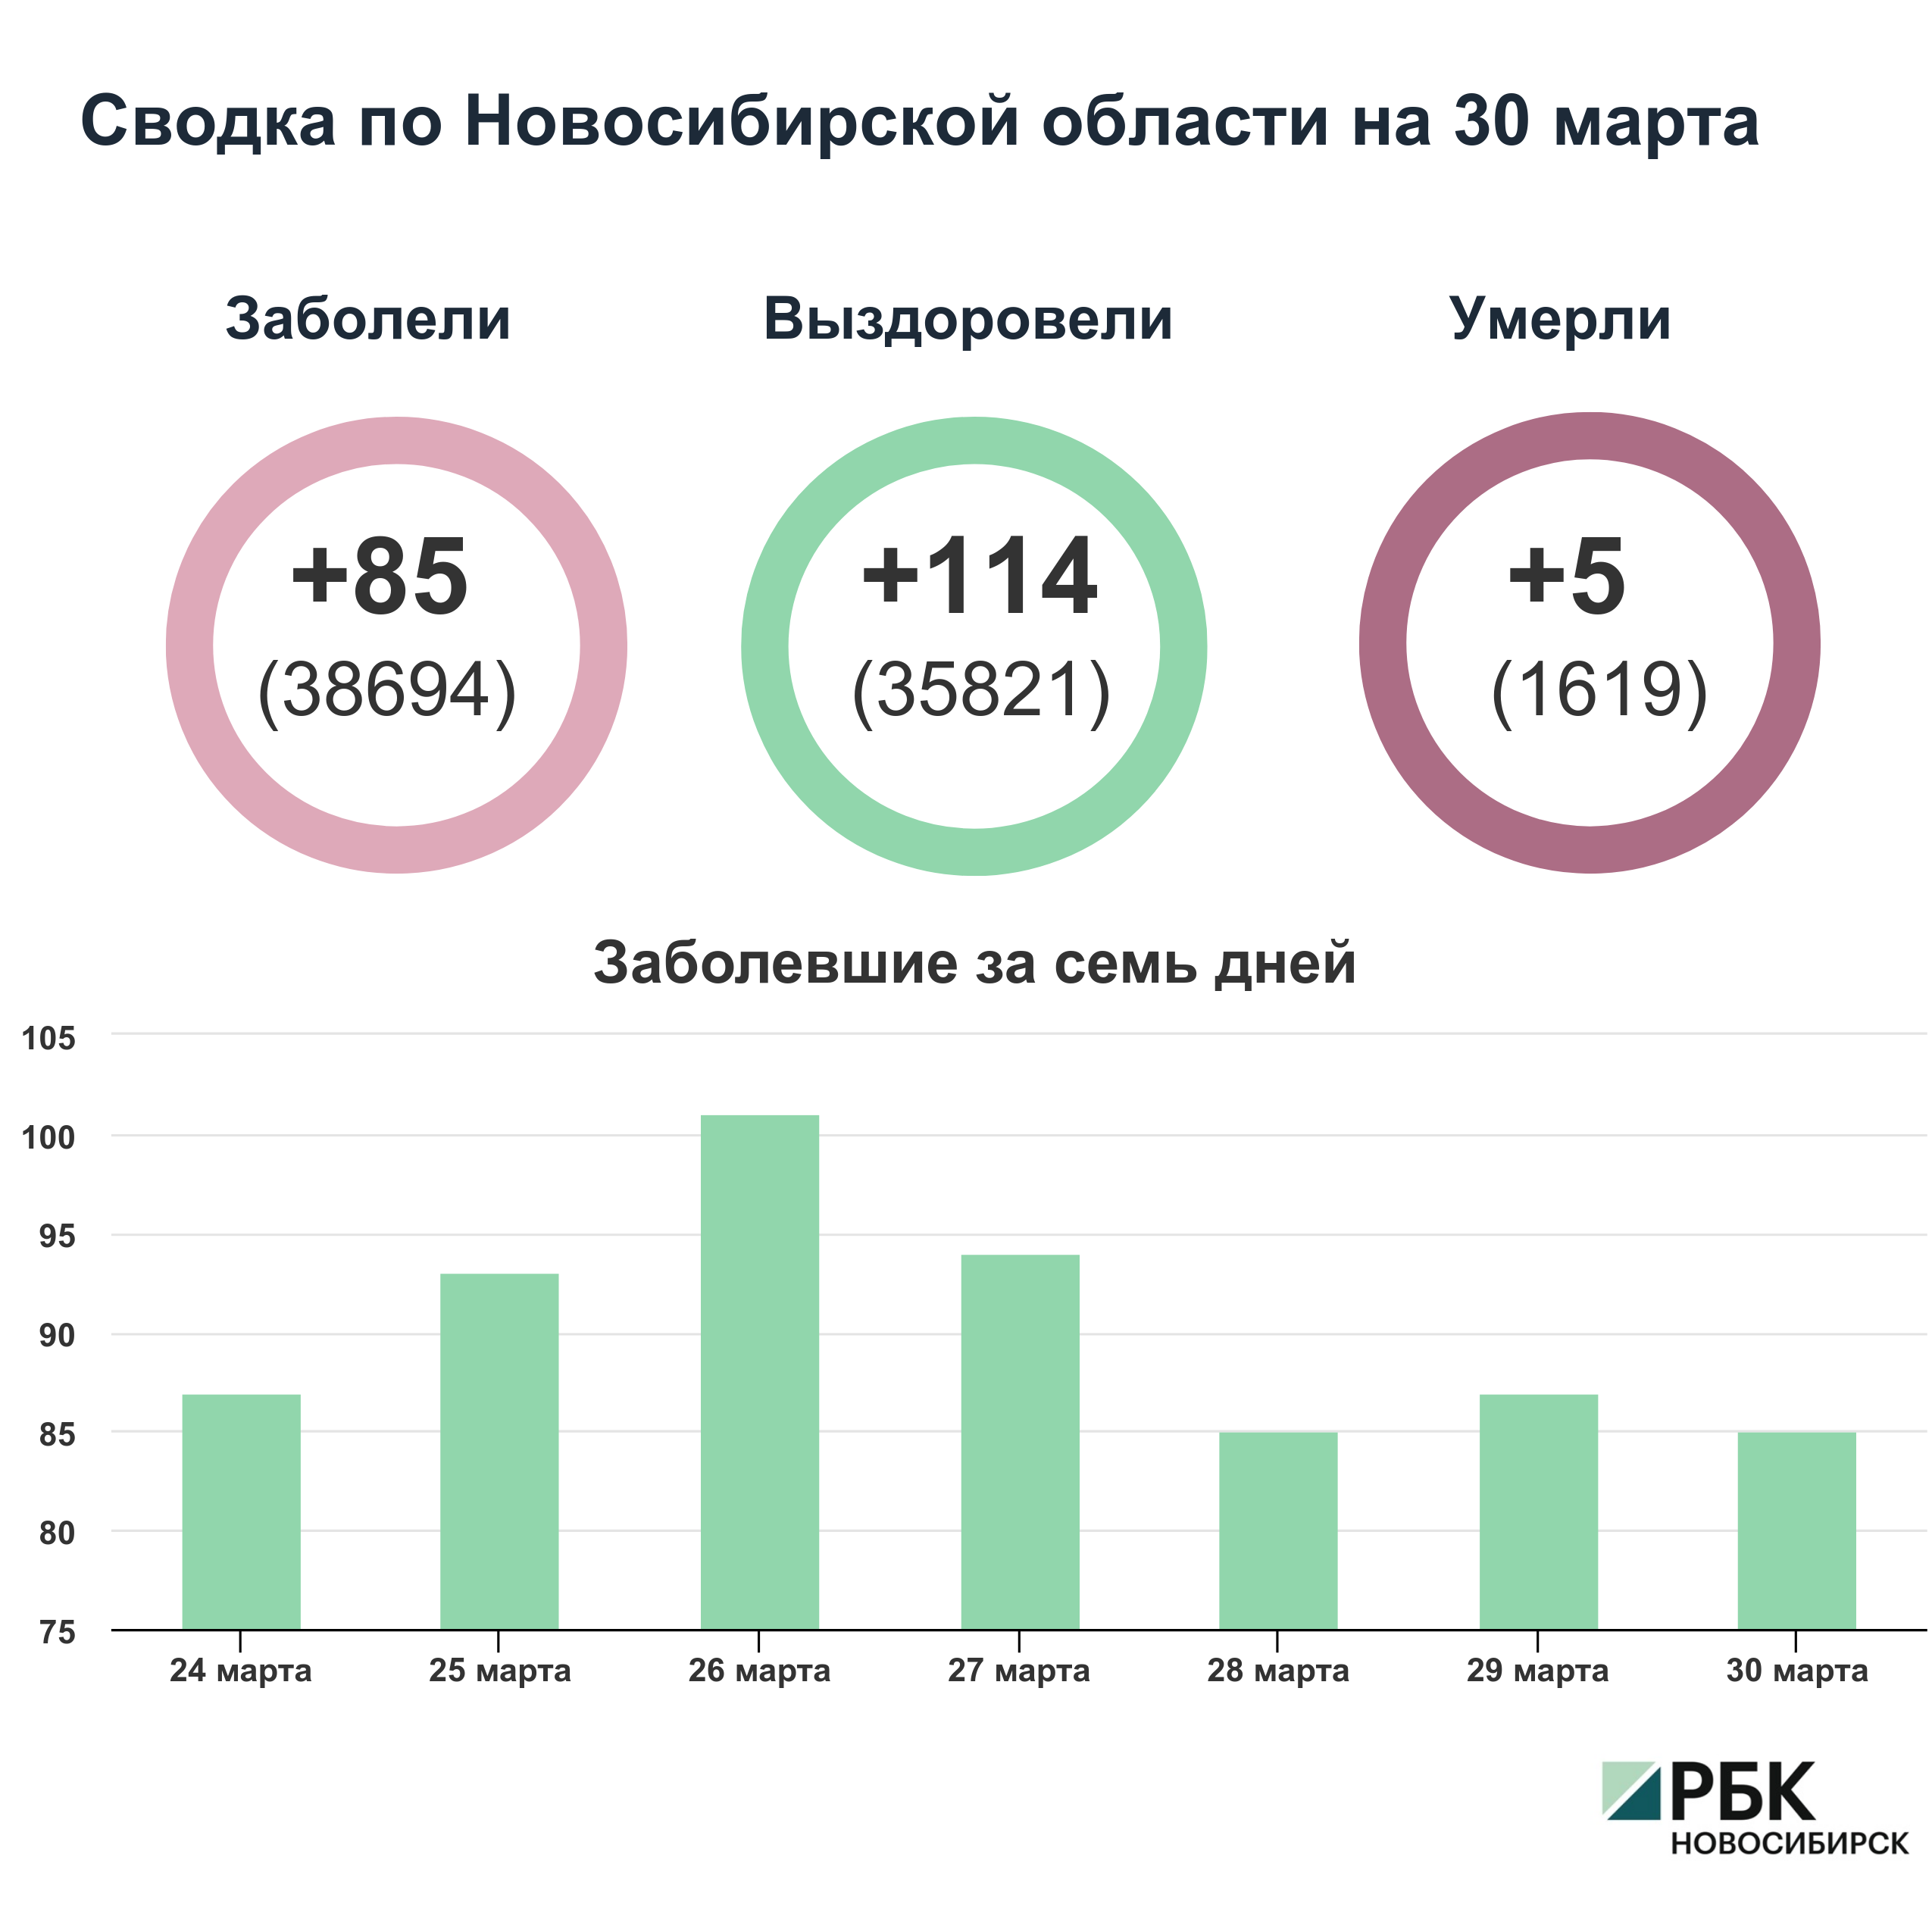 Коронавирус в Новосибирске: сводка на 30 марта